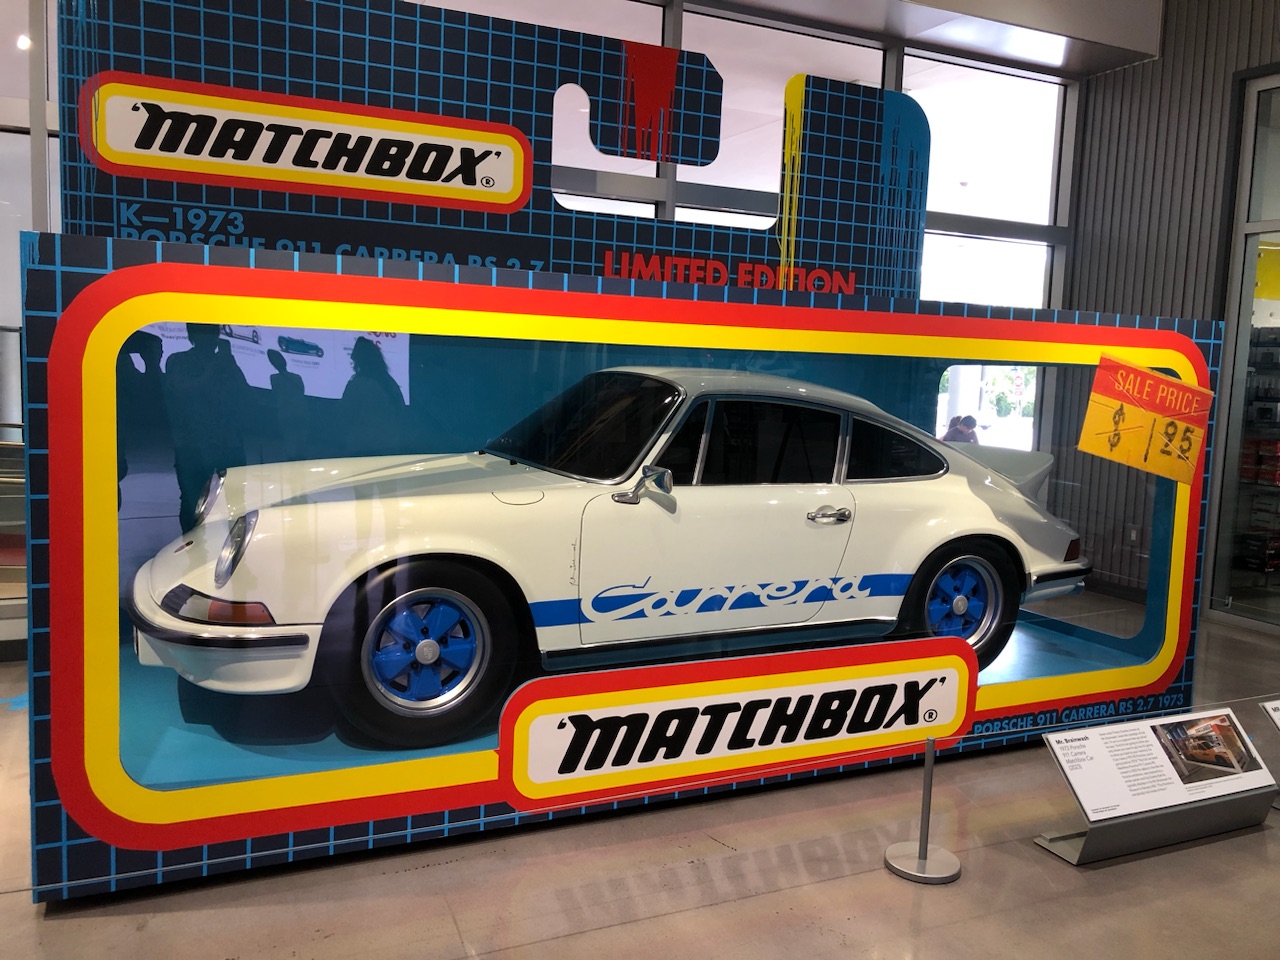 The 1973 Porsche 911 S in 'Top Gun Maverick' Lit Up Sports Car Lovers –  Robb Report